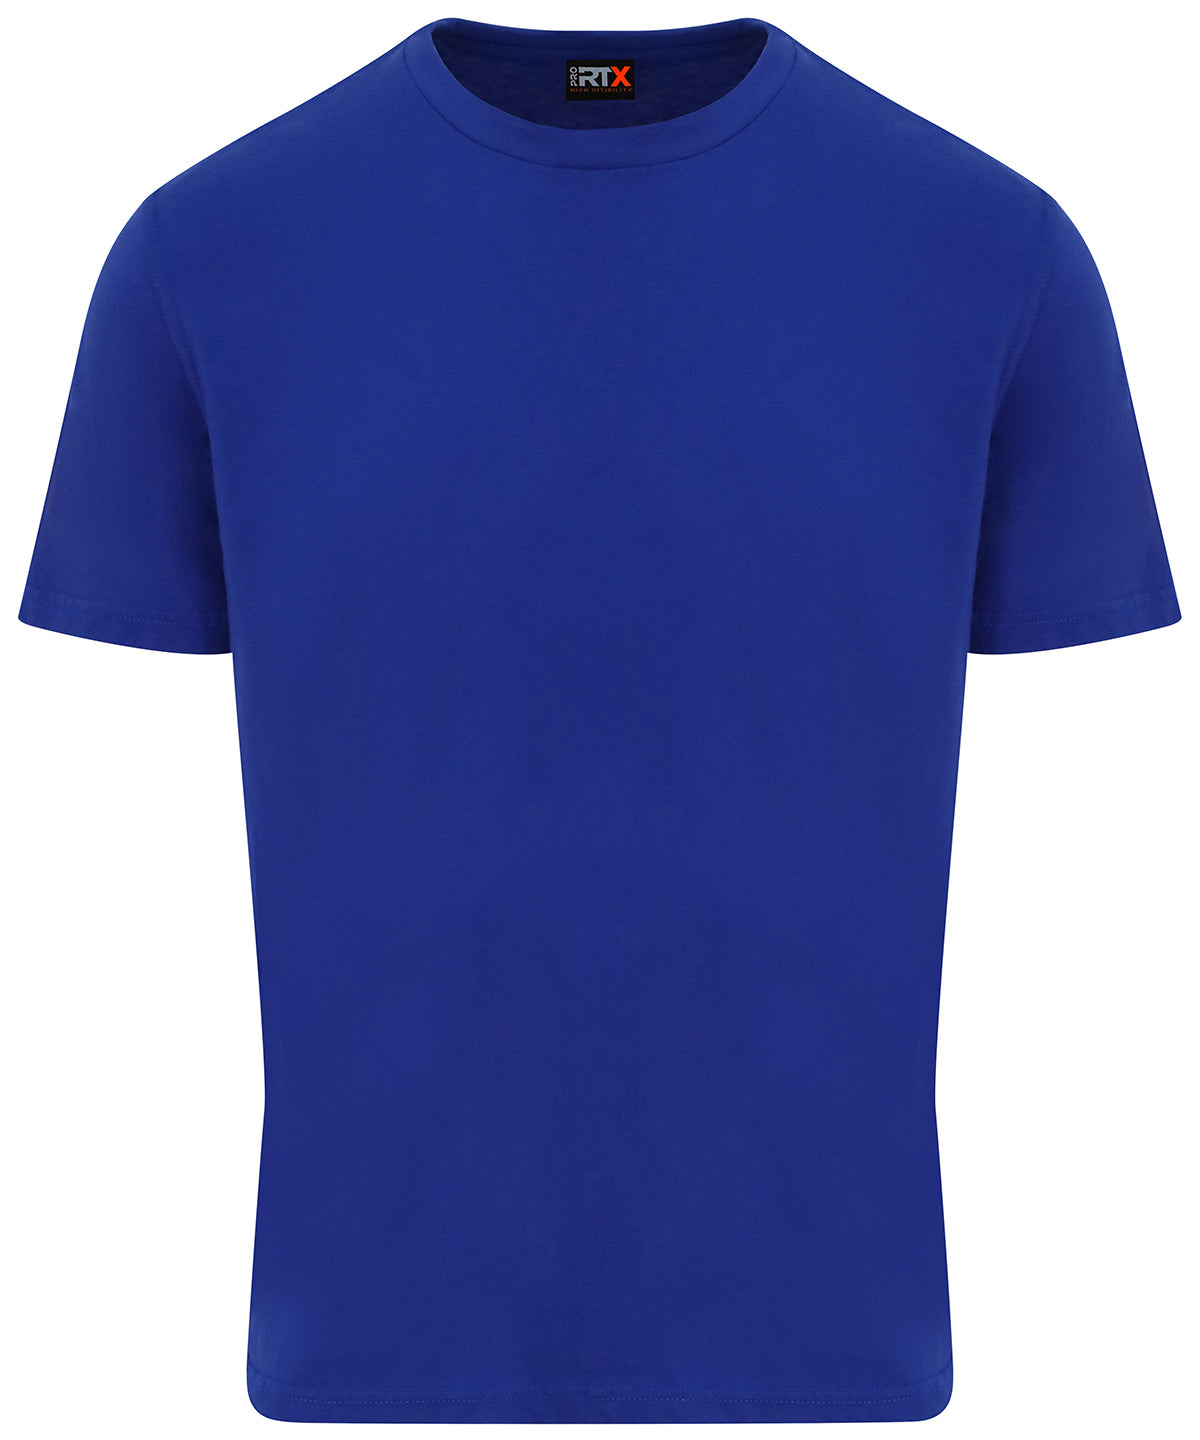 ProRTX Pro t-shirt Royal Blue